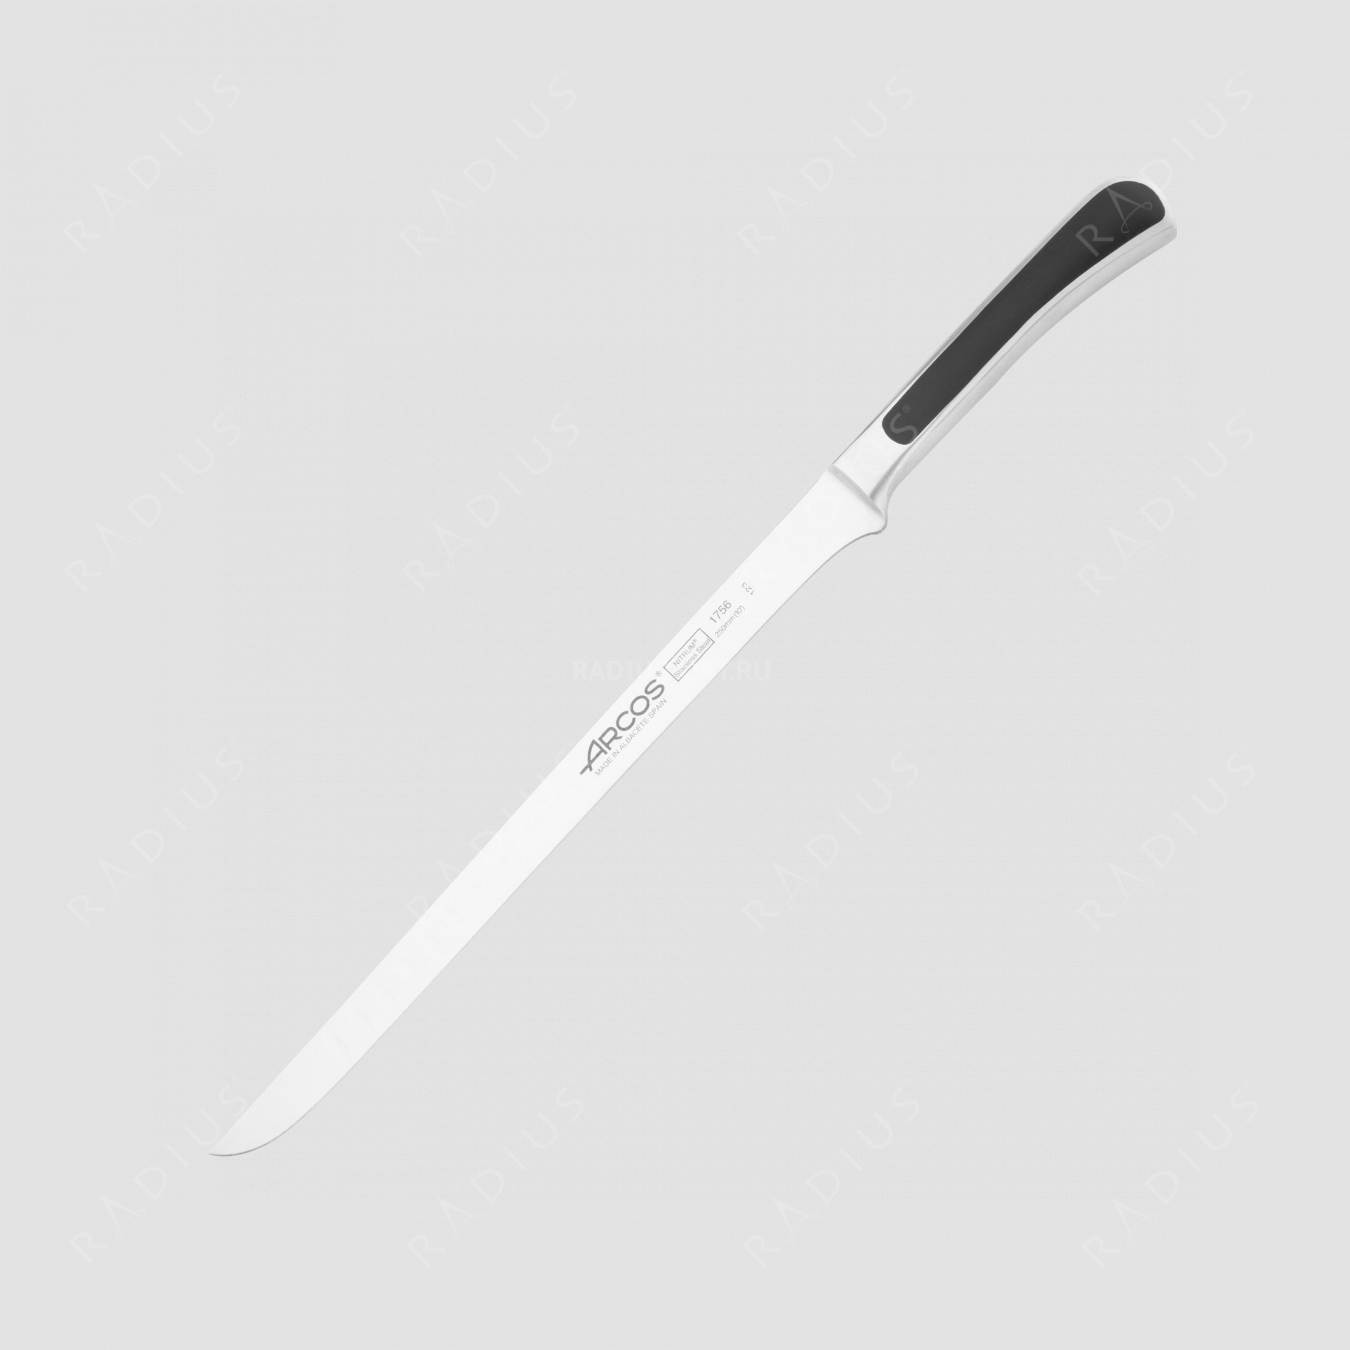 Нож кухонный для нарезки филе 25 см, серия Saeta, ARCOS, Испания